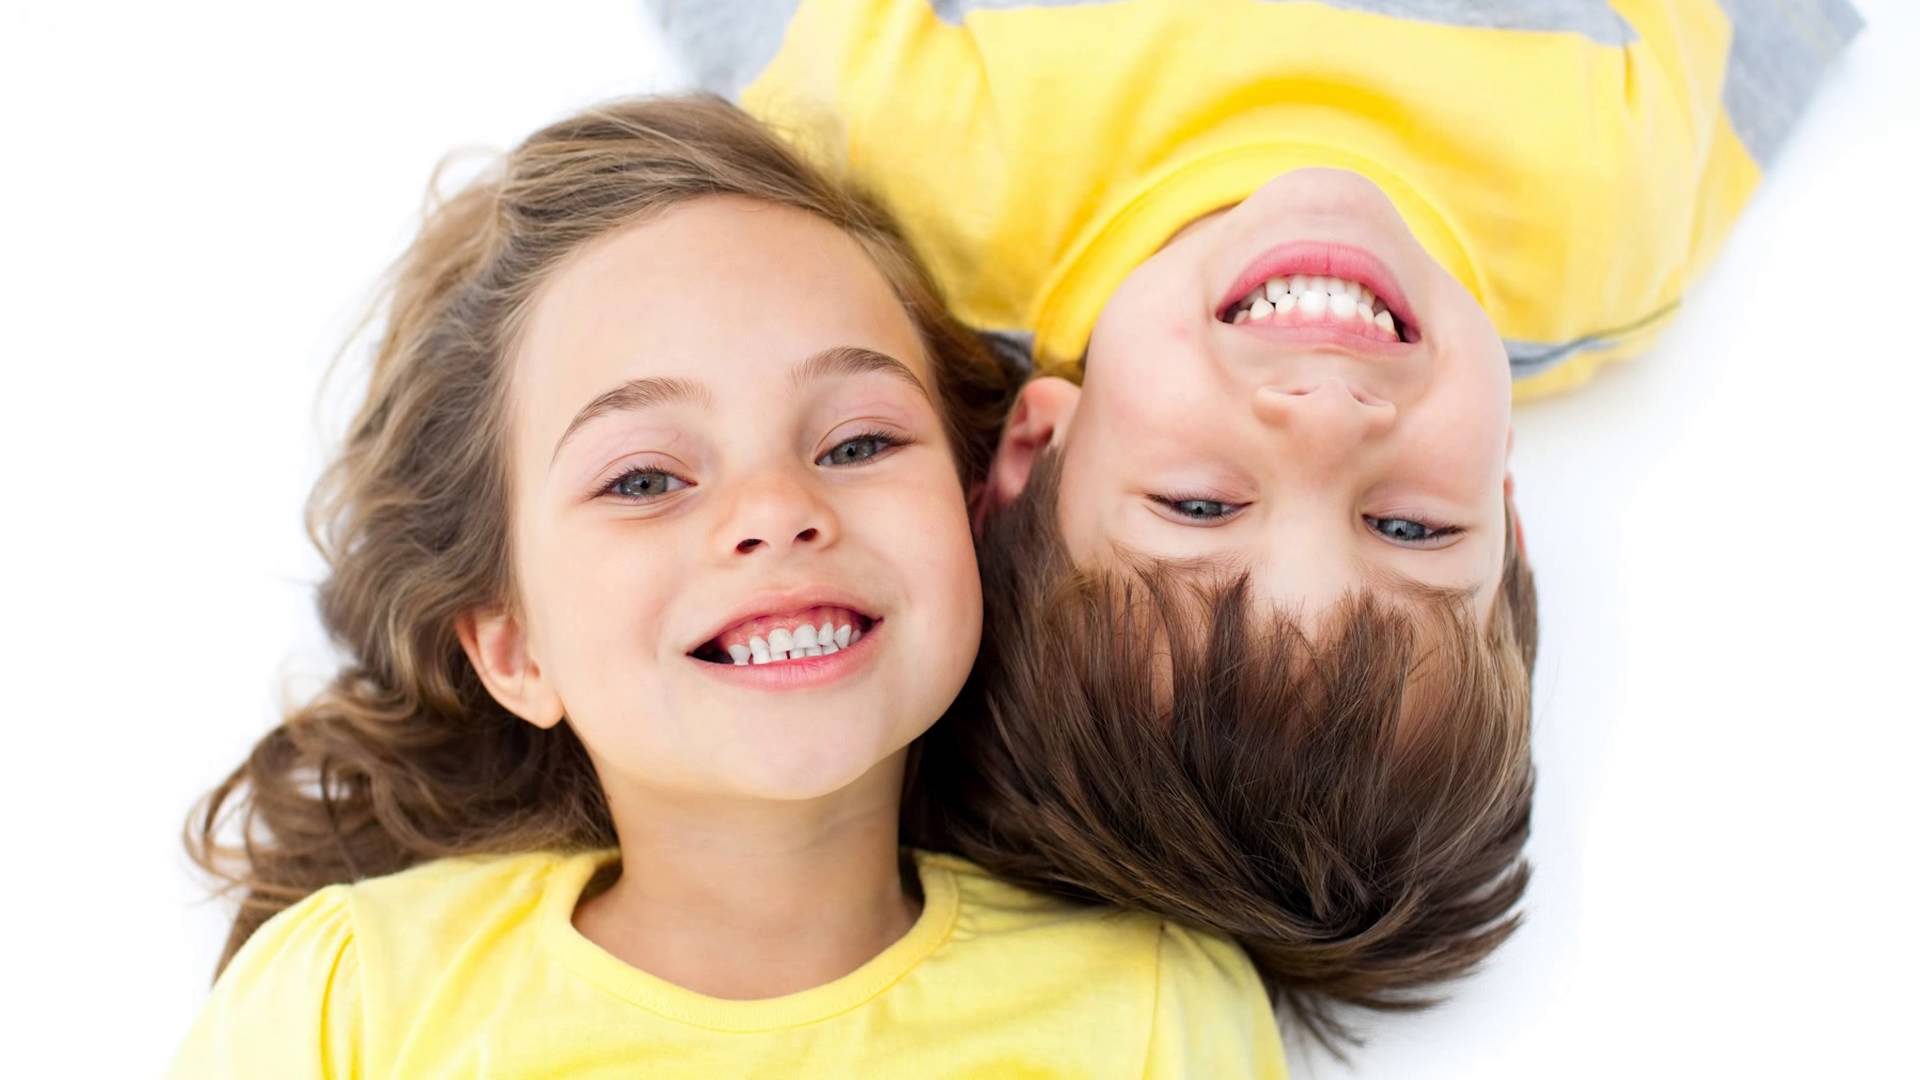 Orthodontic Treatment For Kids